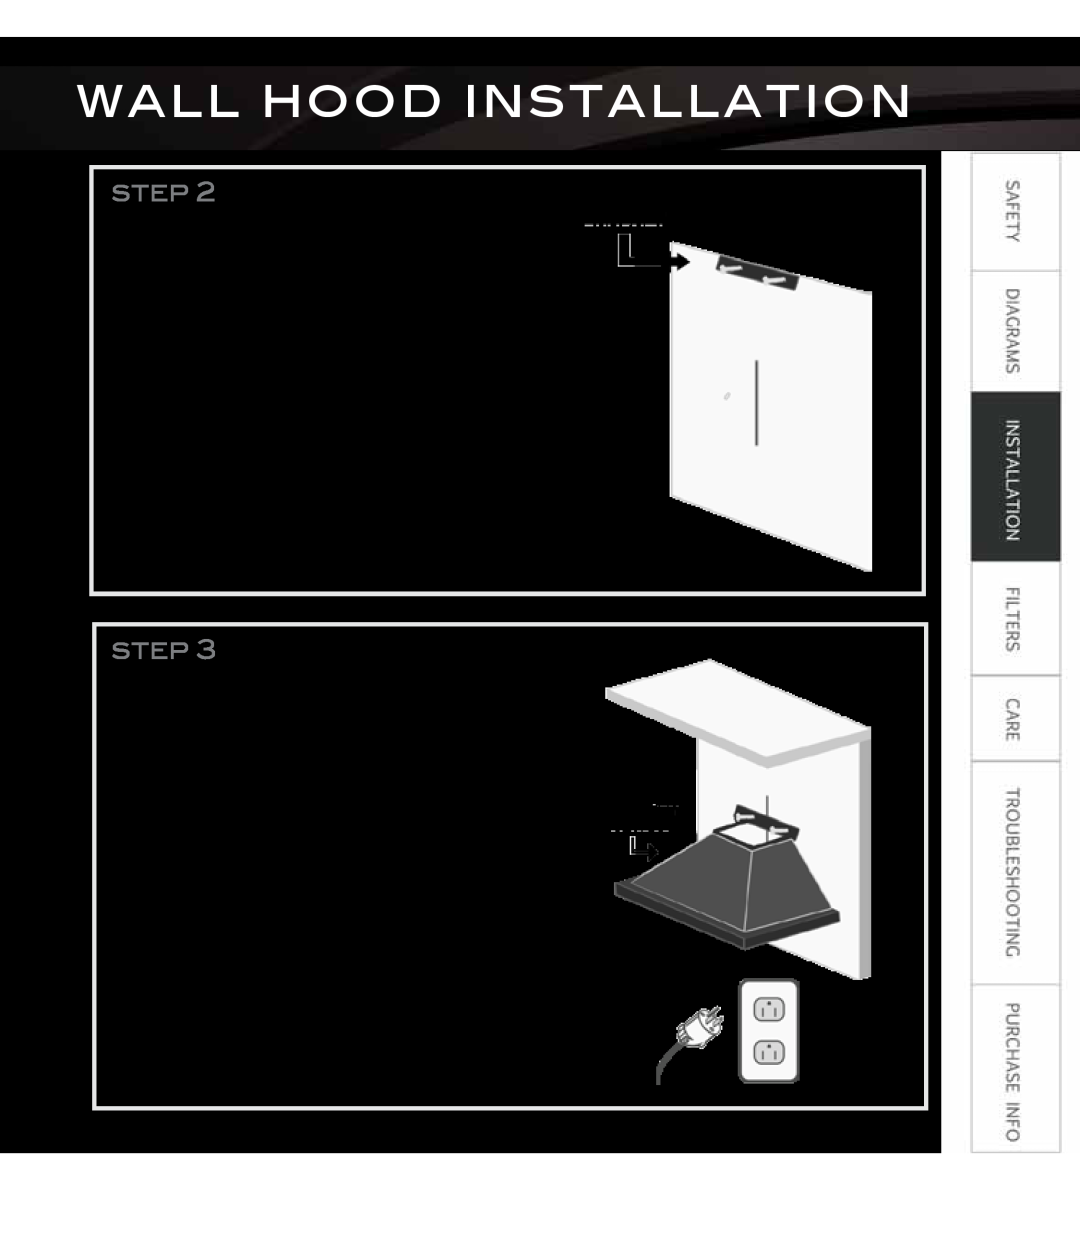 Proline PLZIGS1, PLZWKL2 Install ceiling bracket, Hang hood and connect, Wall Hood Installation, Proline Range Hoods 